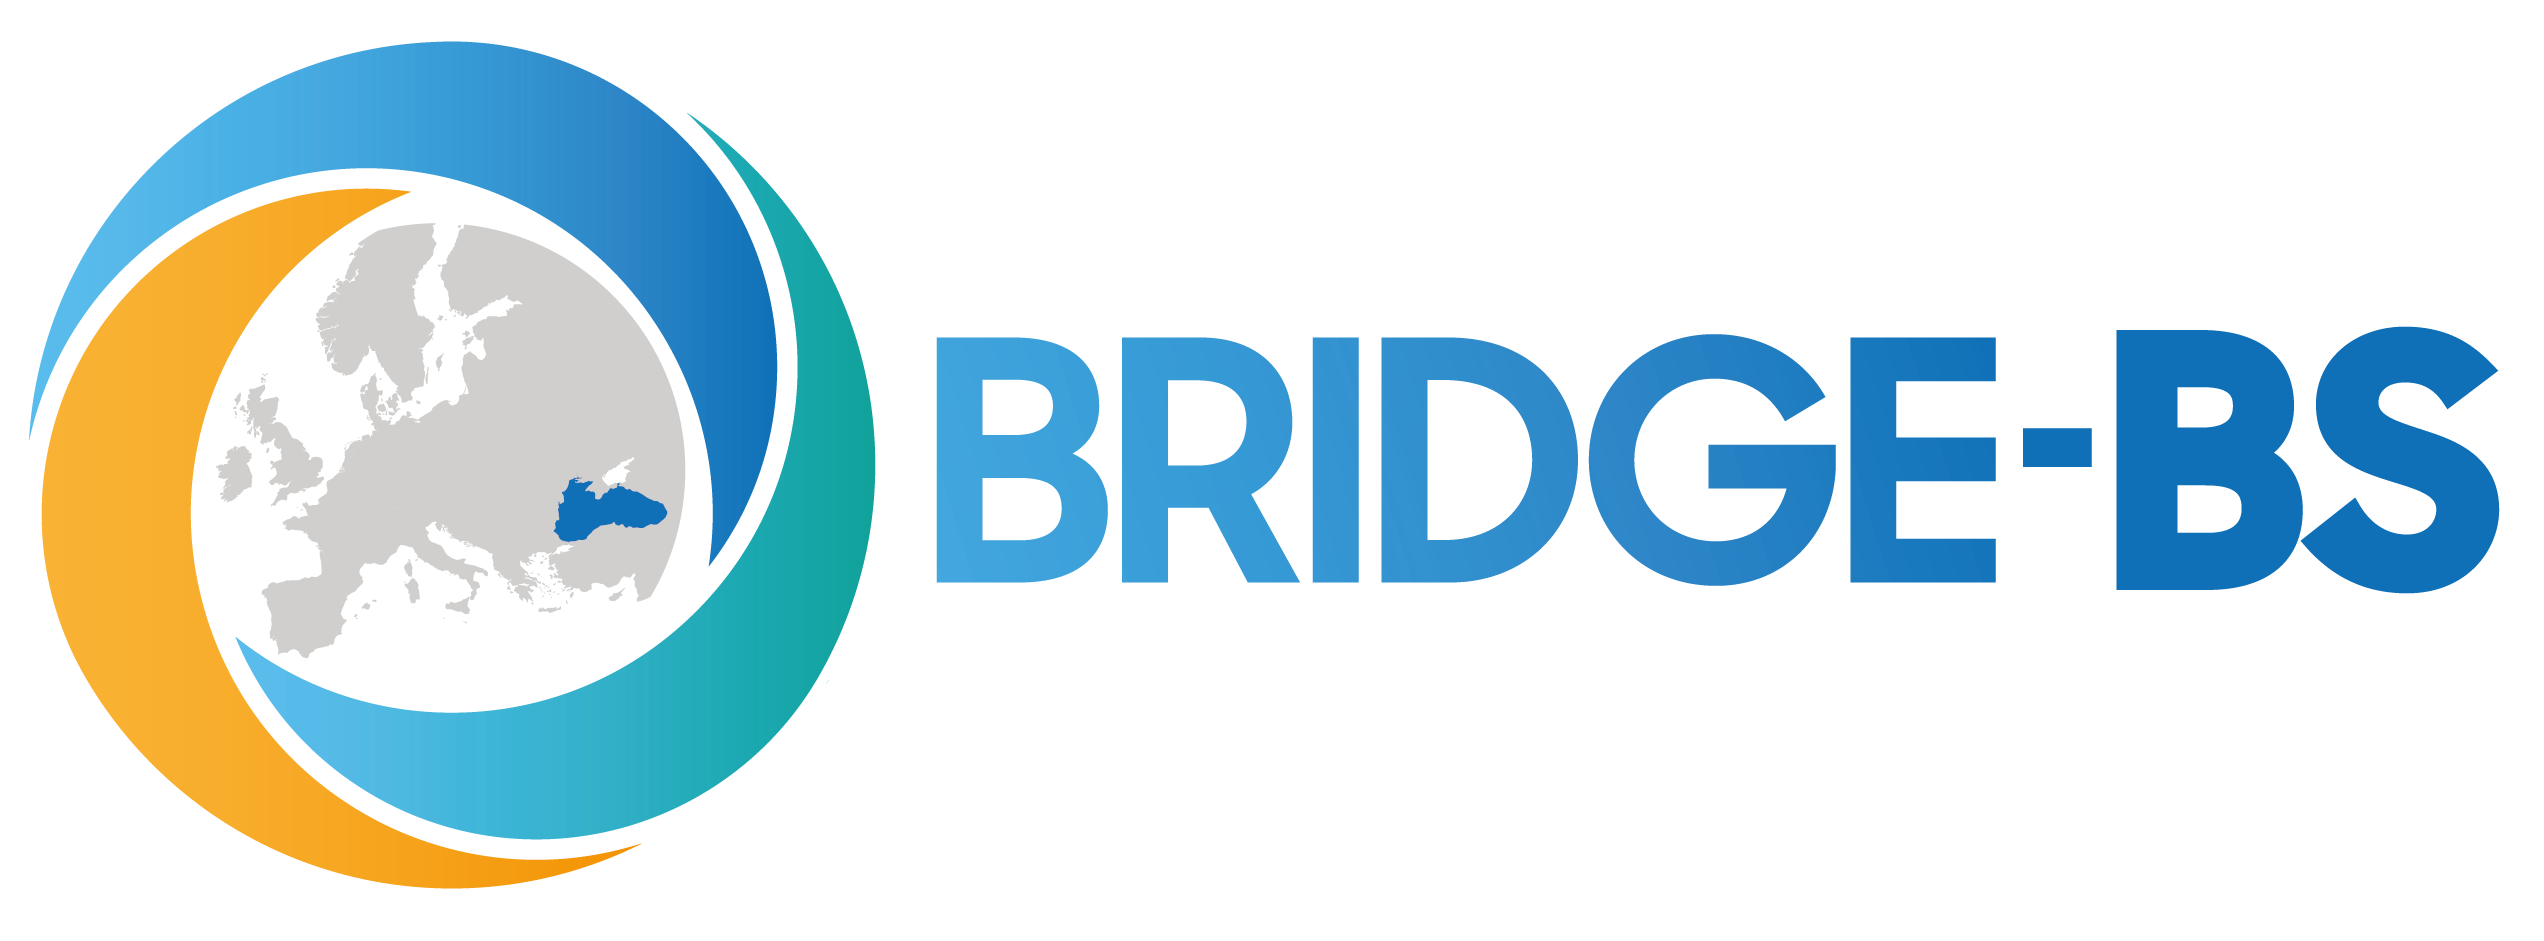 BRIDGE-BS logo 